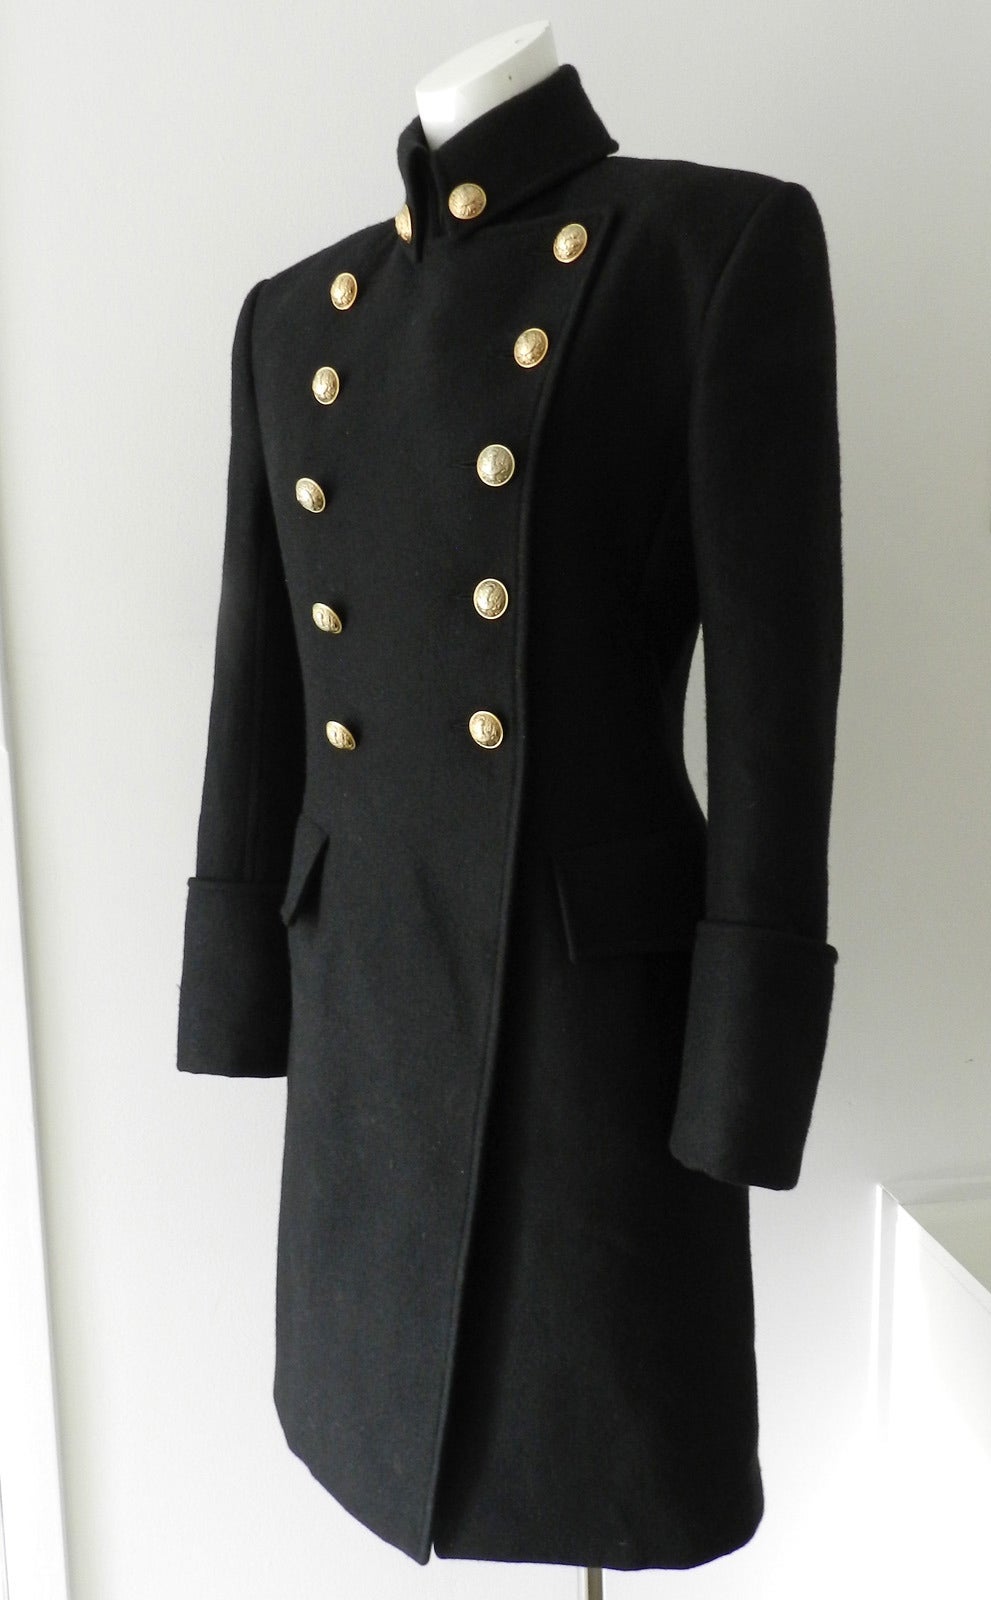 balmain military coat